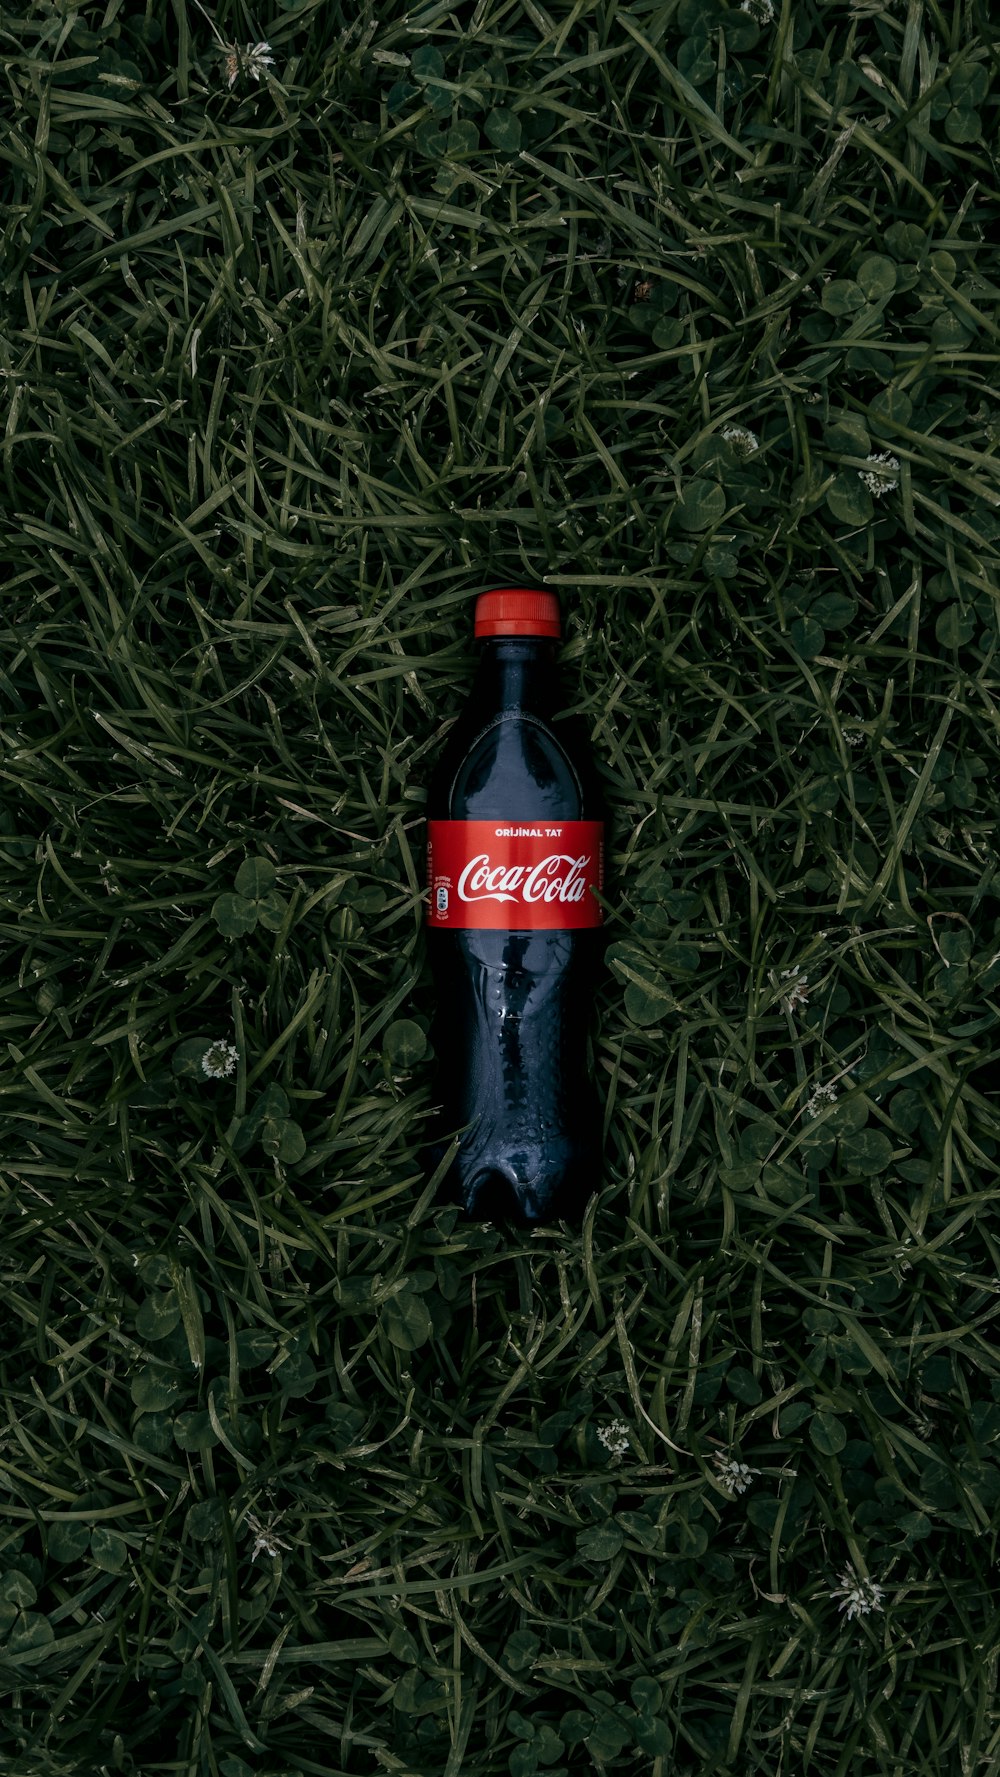 Coca-Cola soda bottle on grass